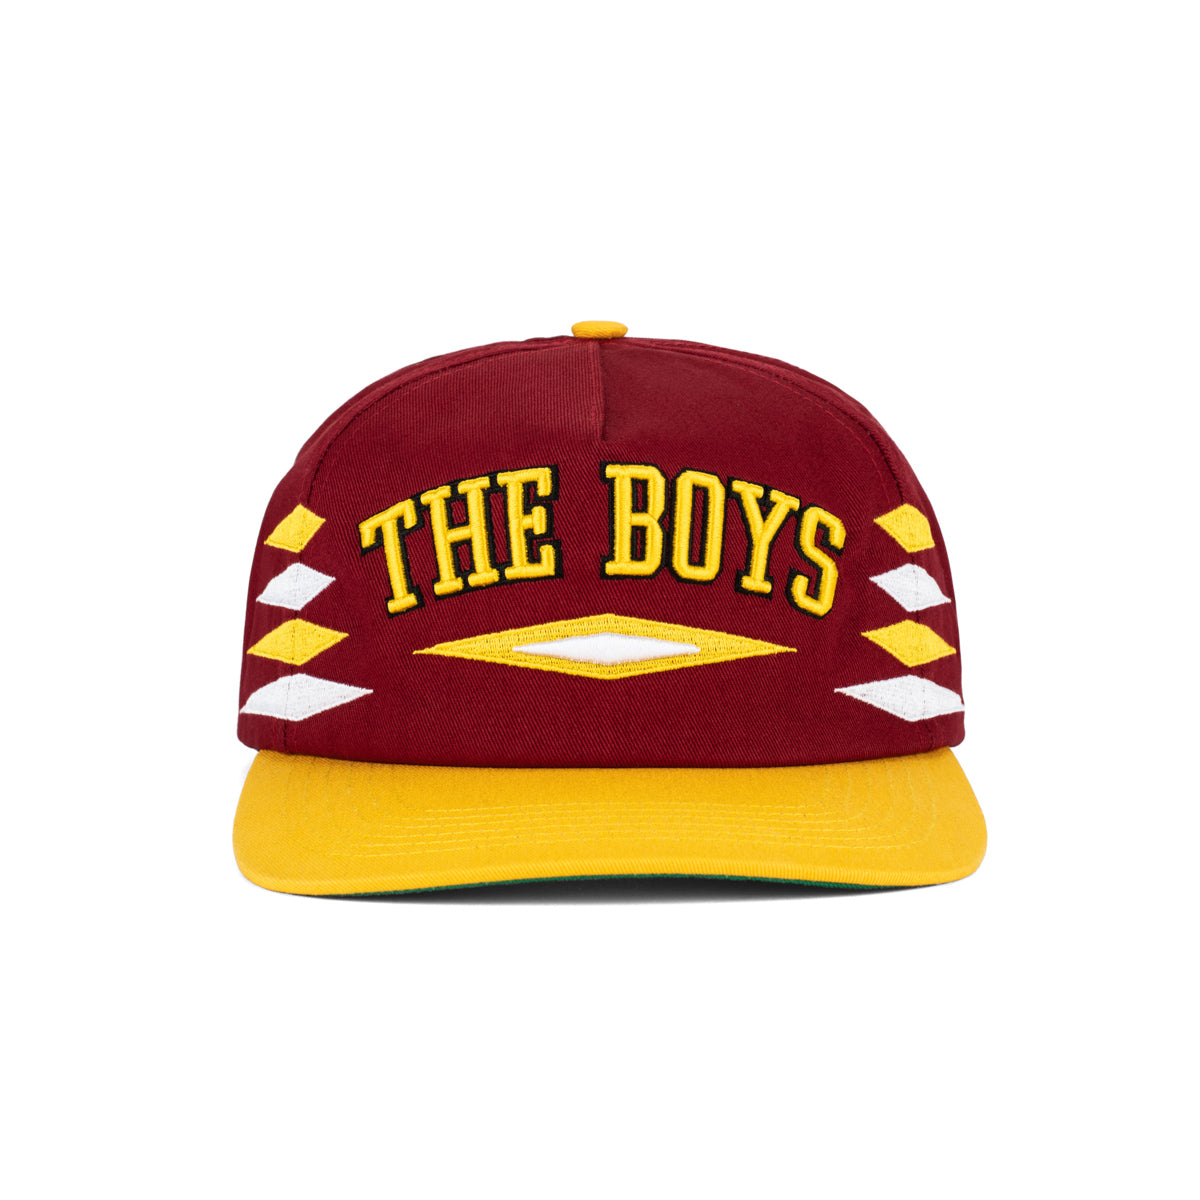 The Boys Diamond Retro Hat-Hats-Bussin With The Boys-Maroon/Yellow-OS-Barstool Sports